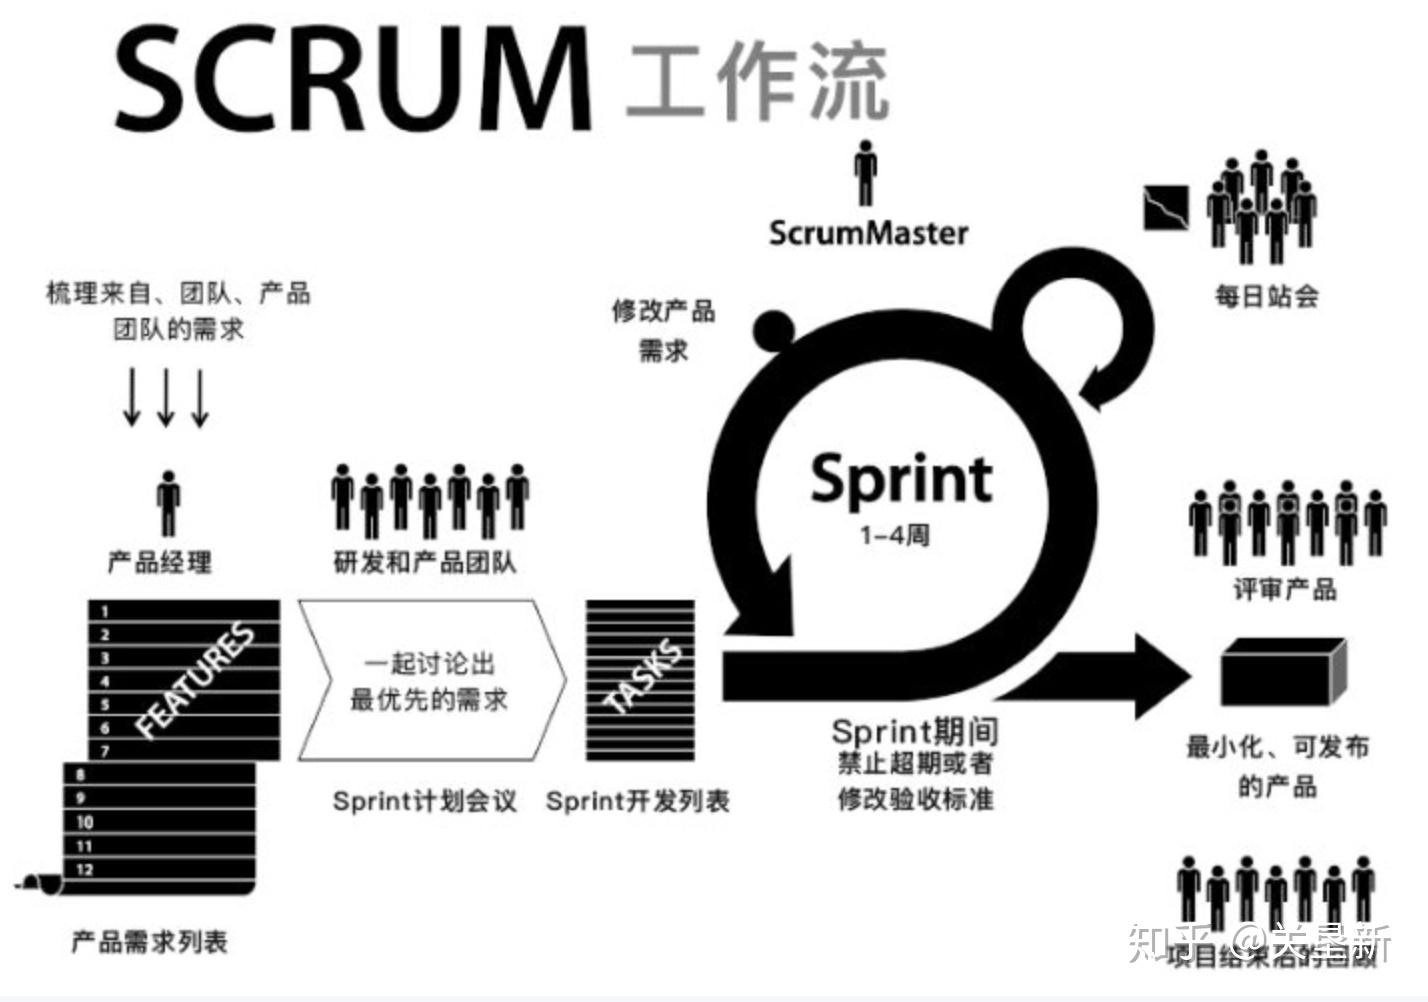 scrumscrum是一种迭代式增量软件开发过程,通常用于敏捷软件开发